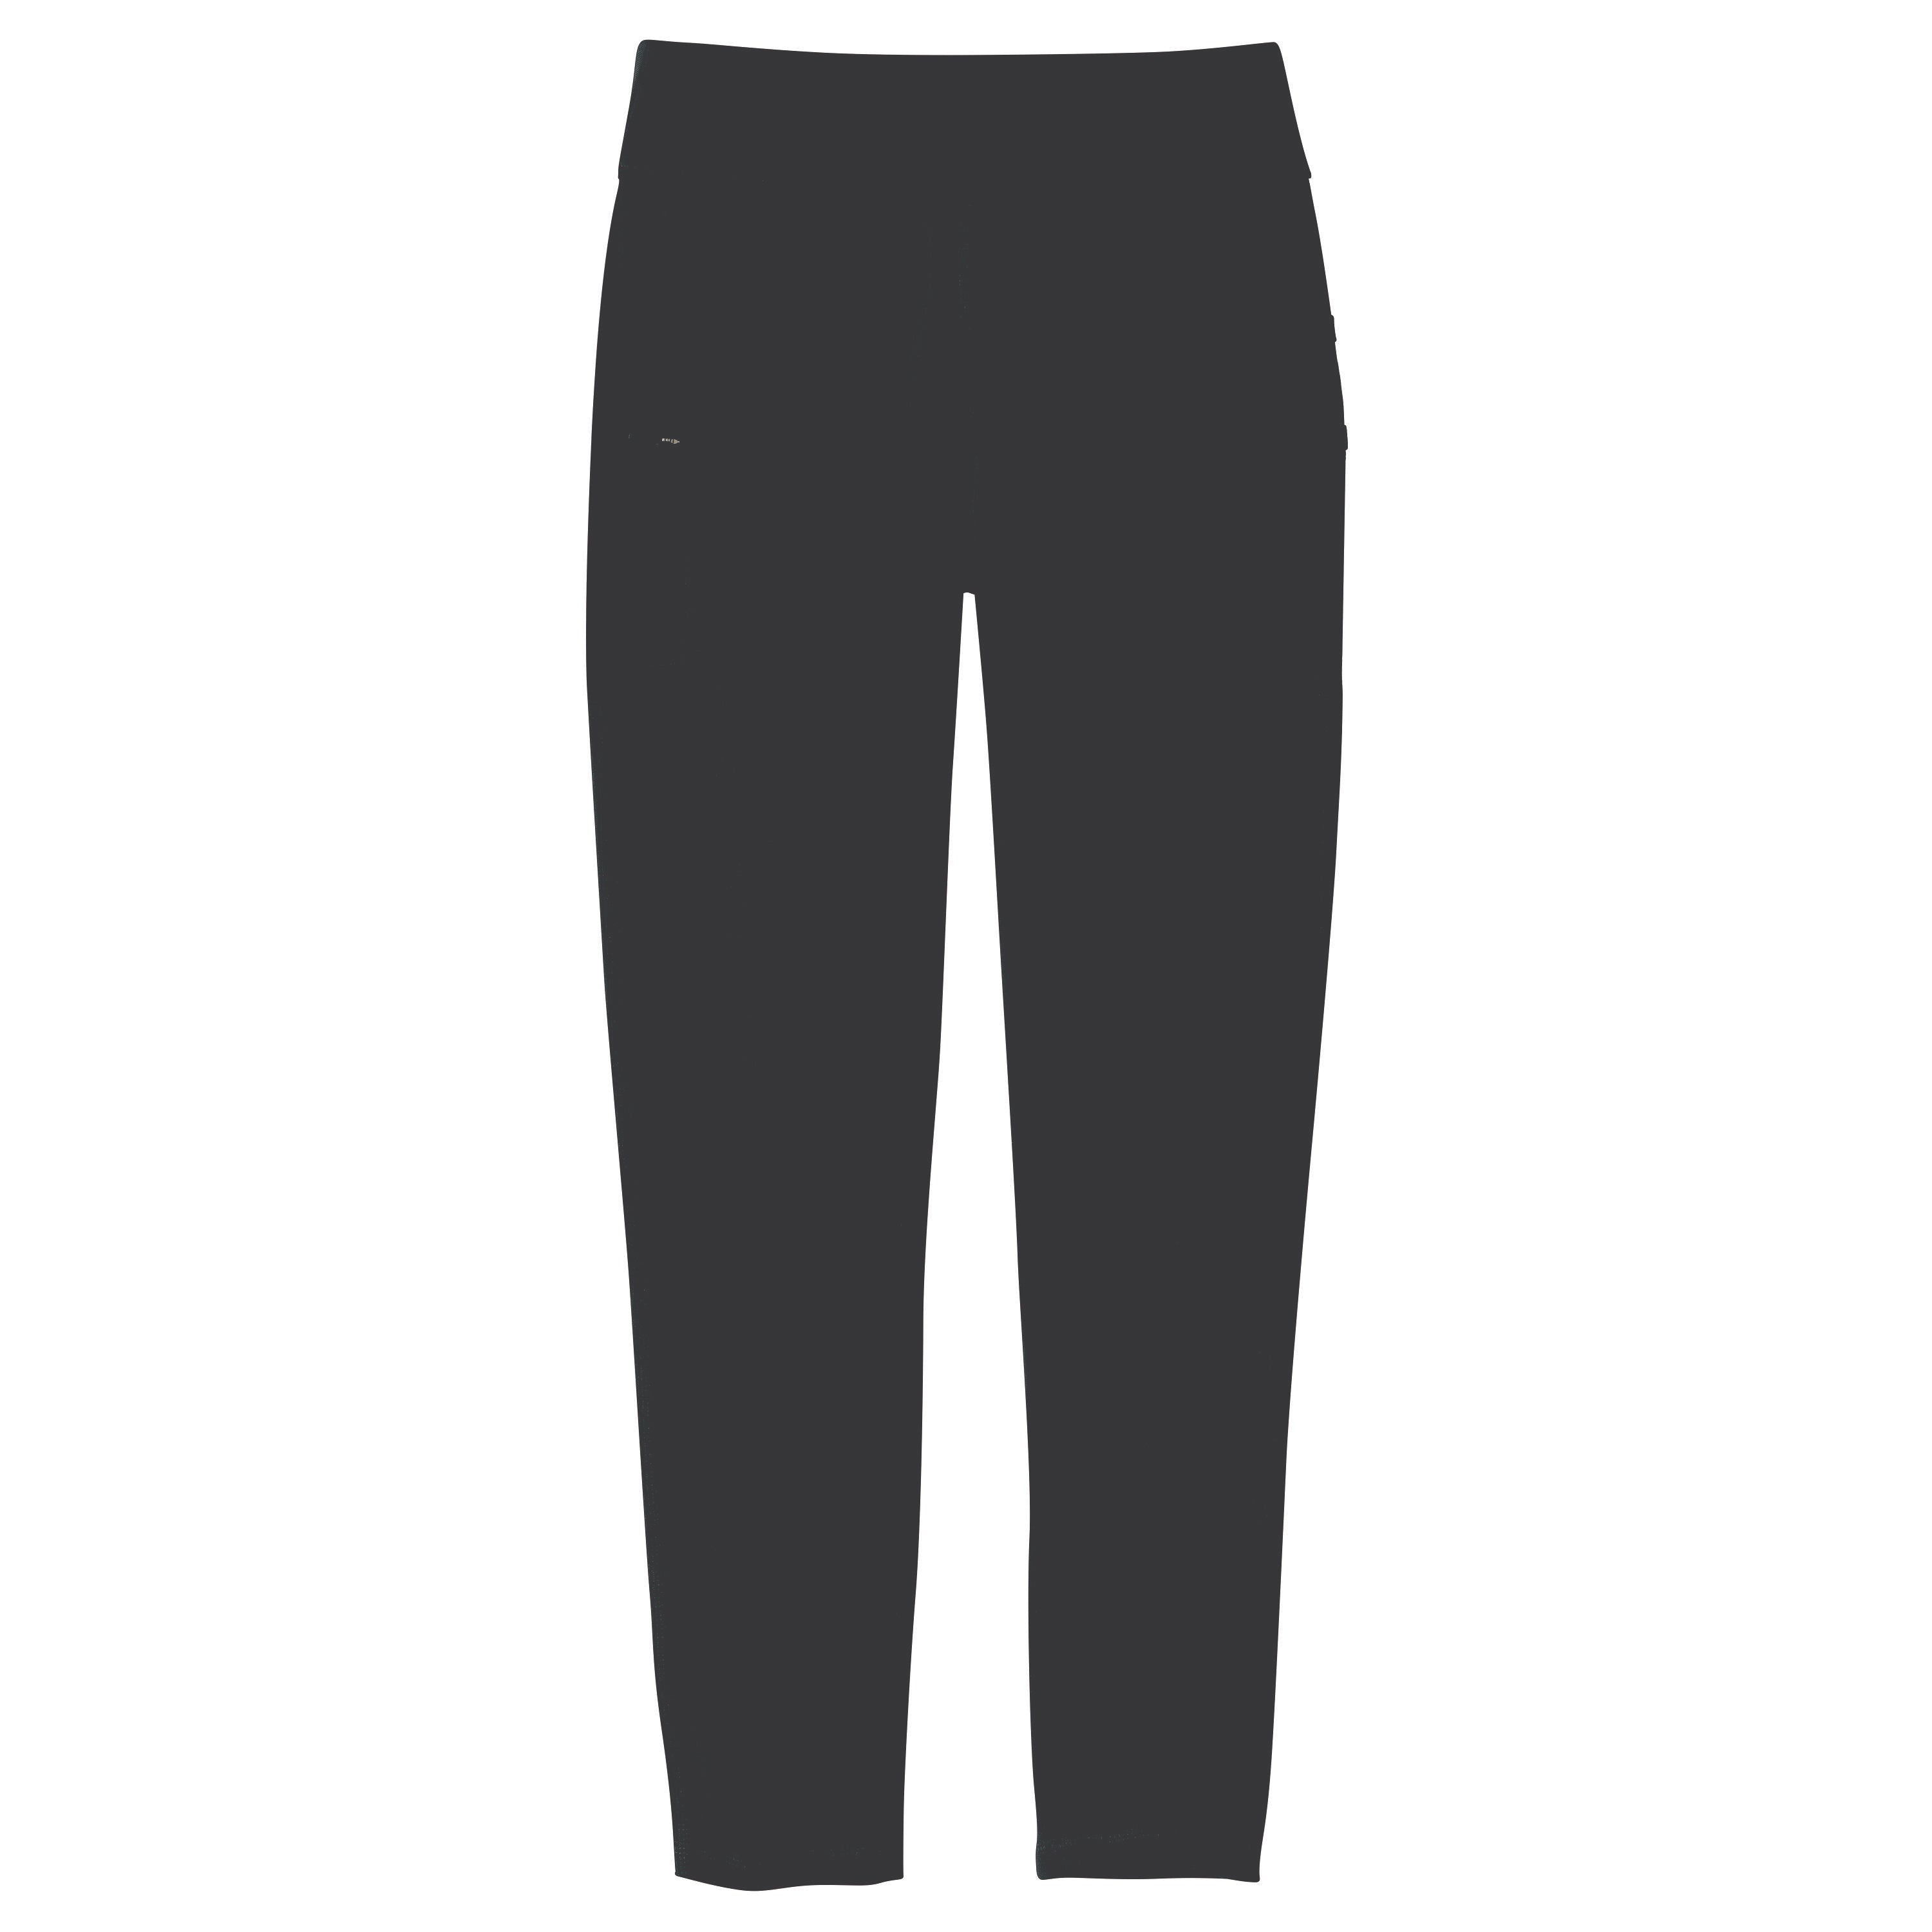 102213 - Carhartt Women's Original Fit Crawford Fleece Lined Pant